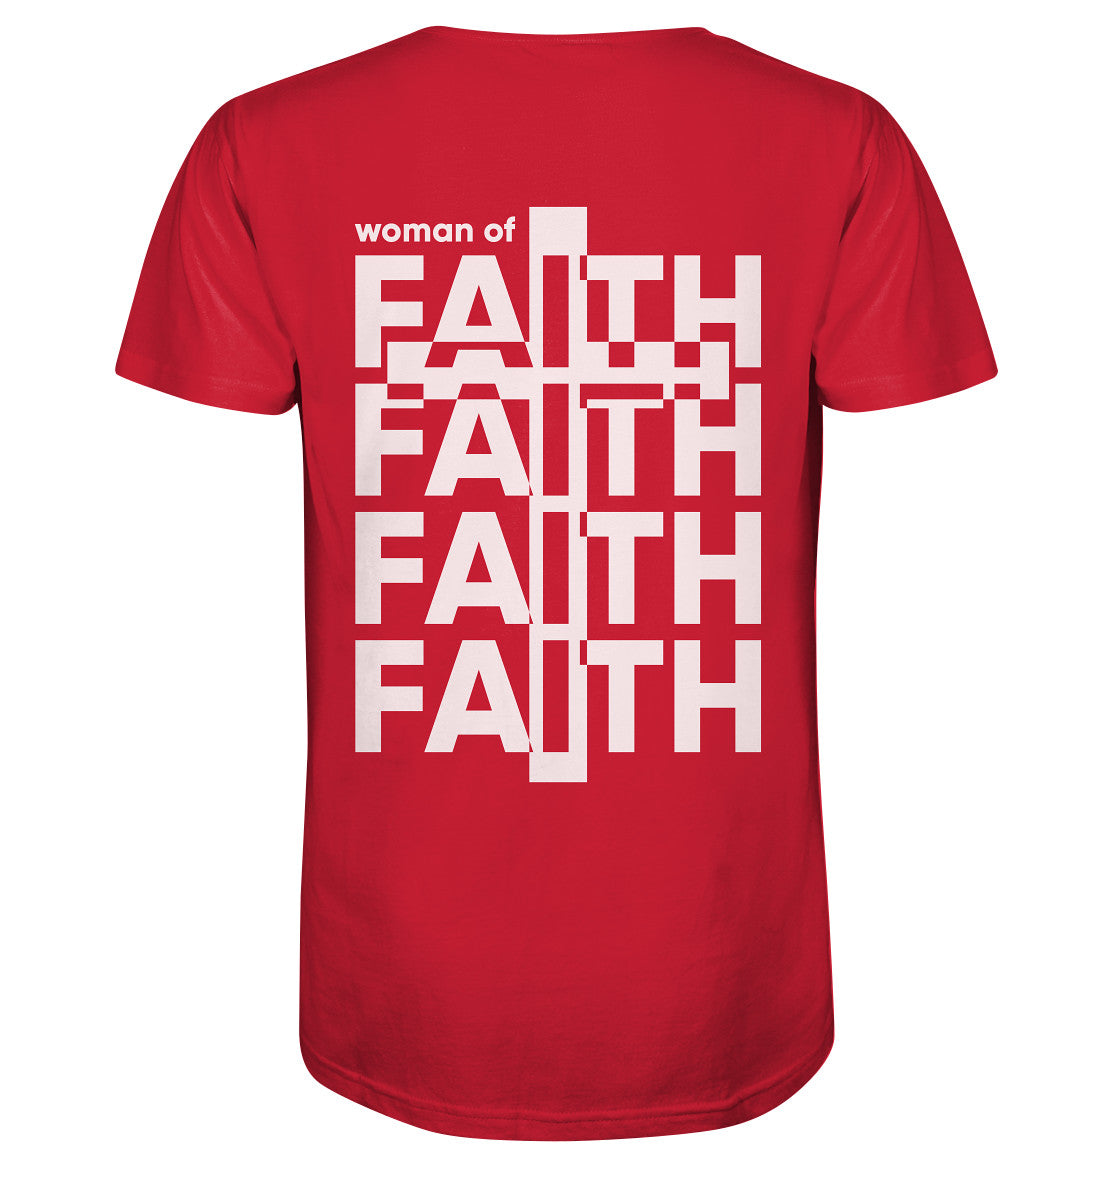 Woman of Faith - Organic Shirt